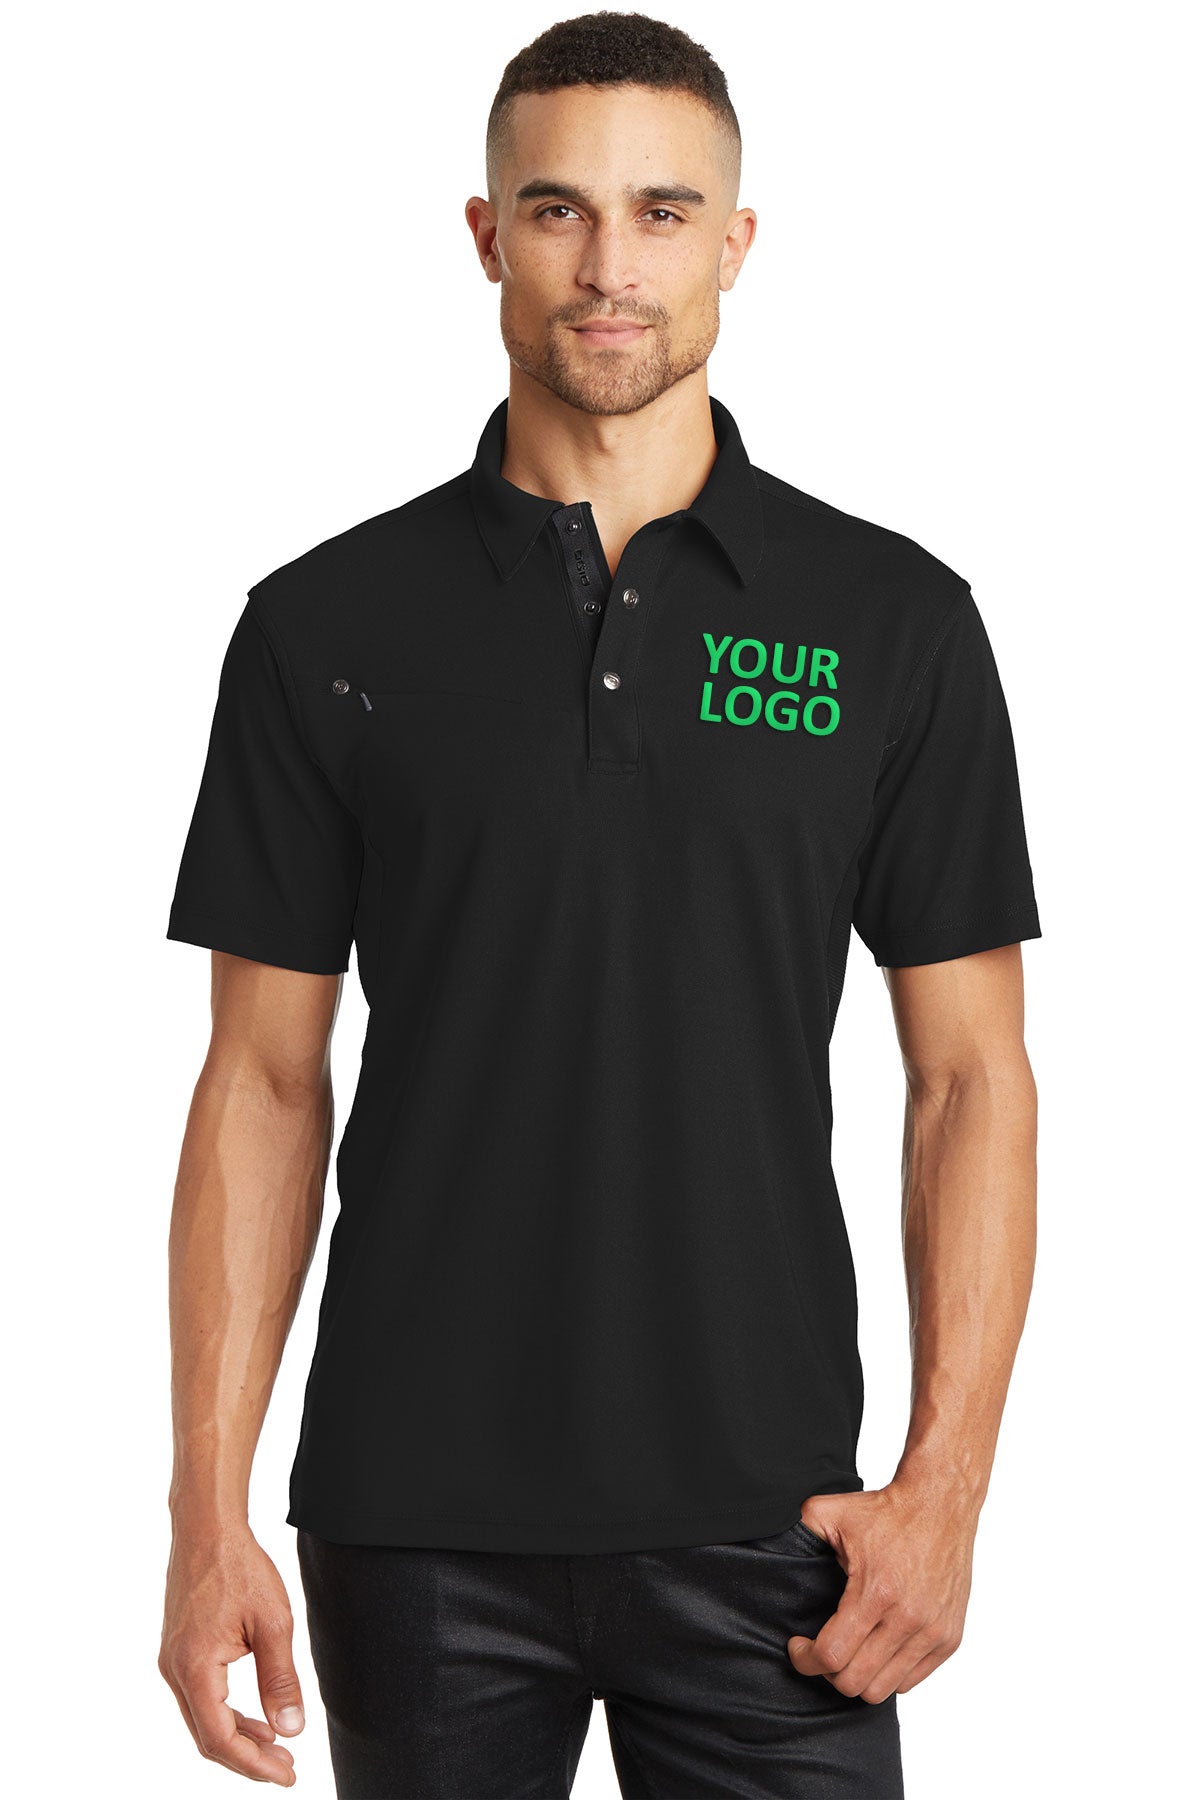 OGIO Blacktop/Blacktop OG102 polo shirts with custom logo